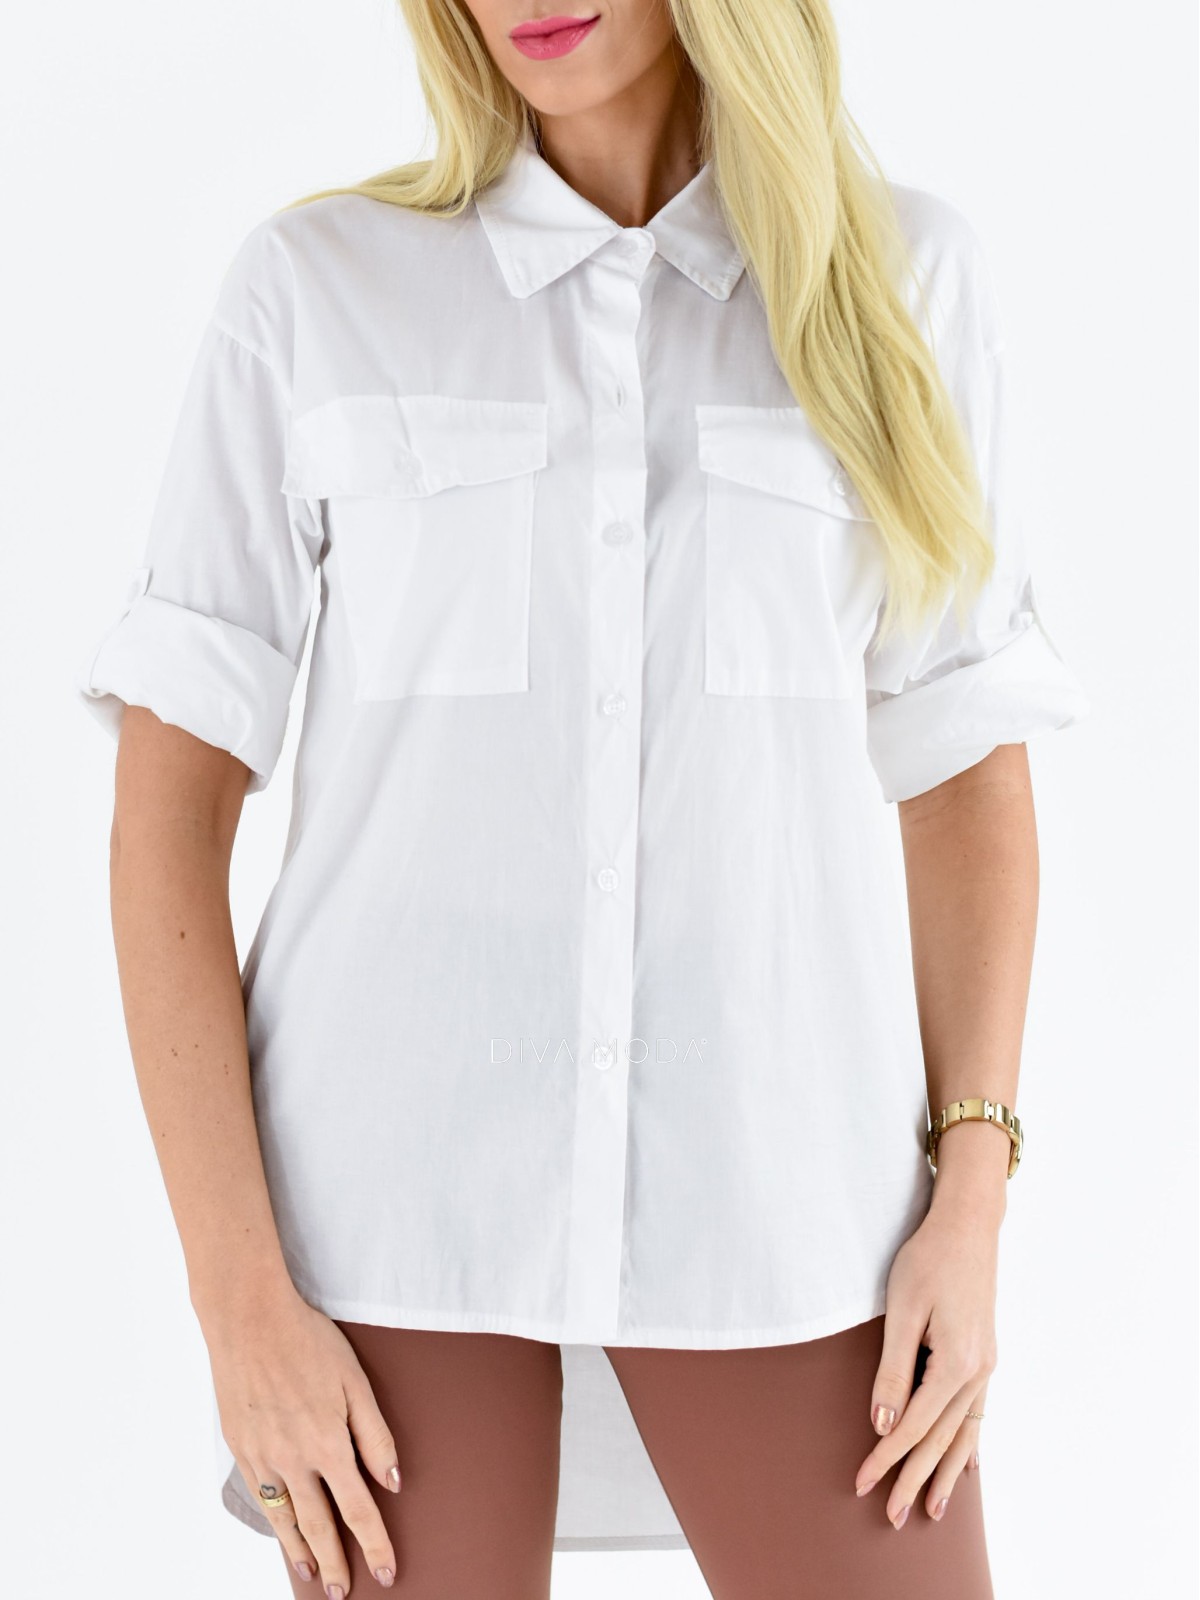 Košile s kapsami Lara bílá A 37